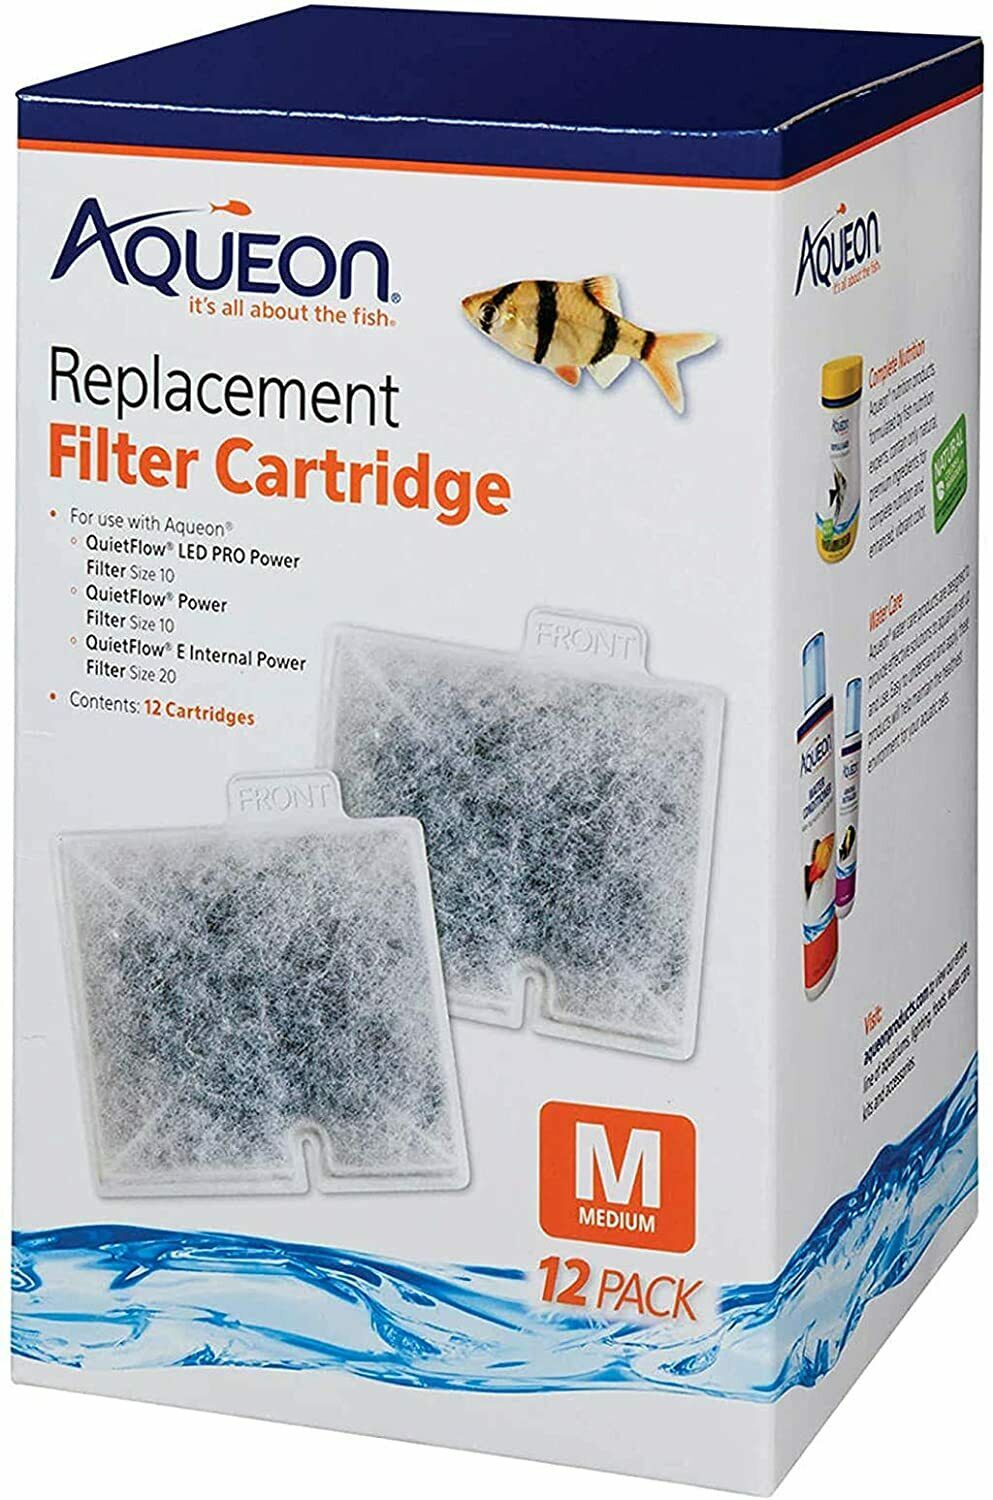 Aqueon Quietflow Replacement Filter Cartridge - Medium  Free Shipping